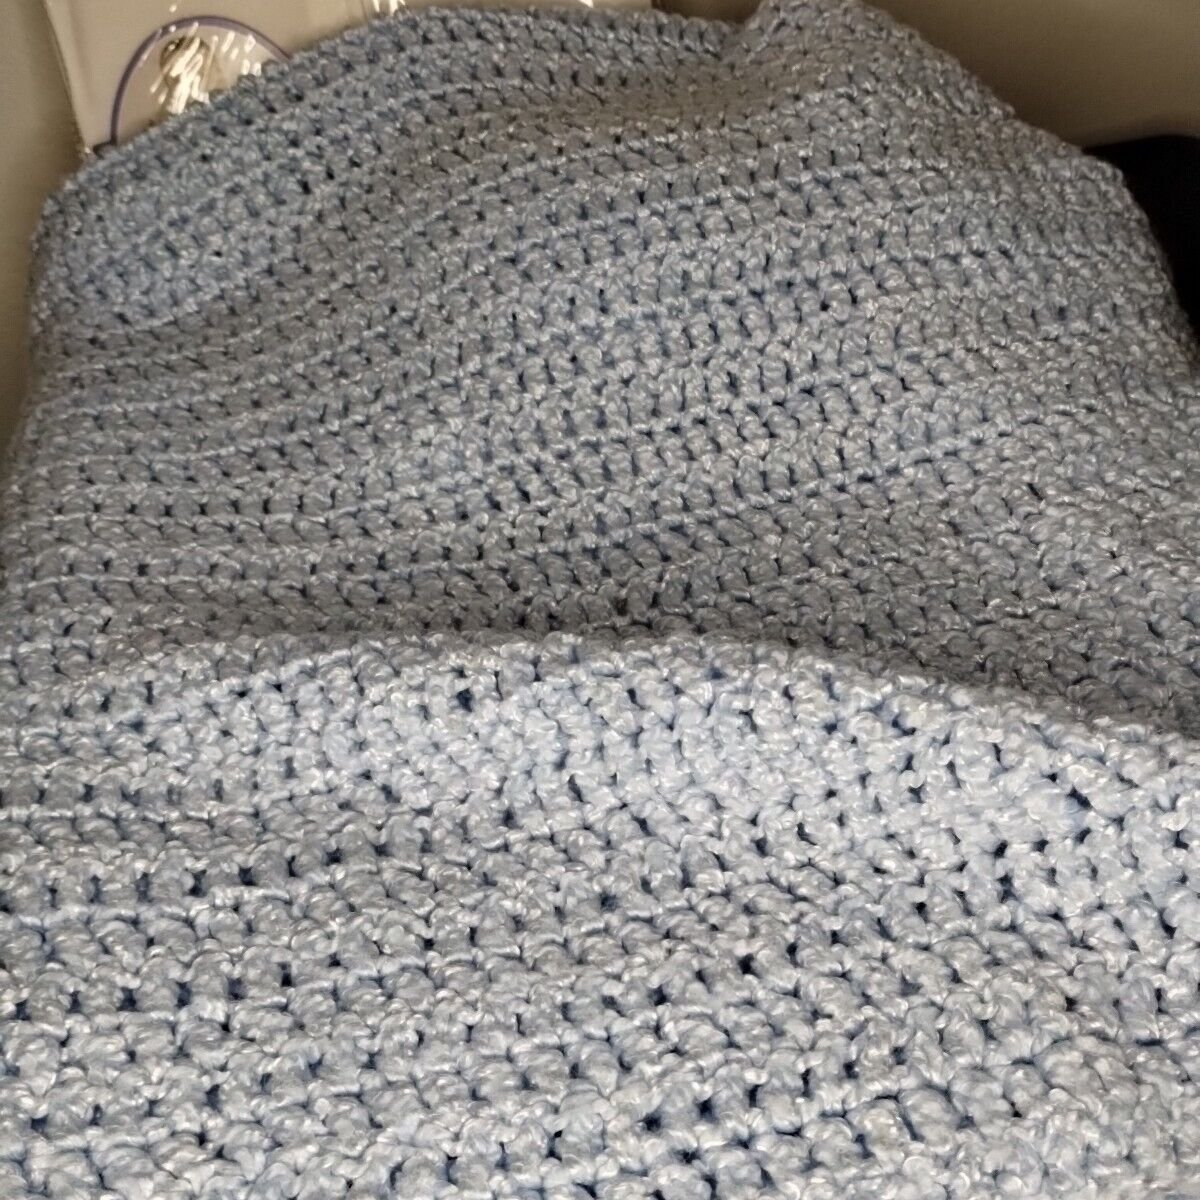 Safe Dreams Wearable Blanket By Halo Small Sleep + Baby Blanket & Ikea Sheep EzbejQqqt